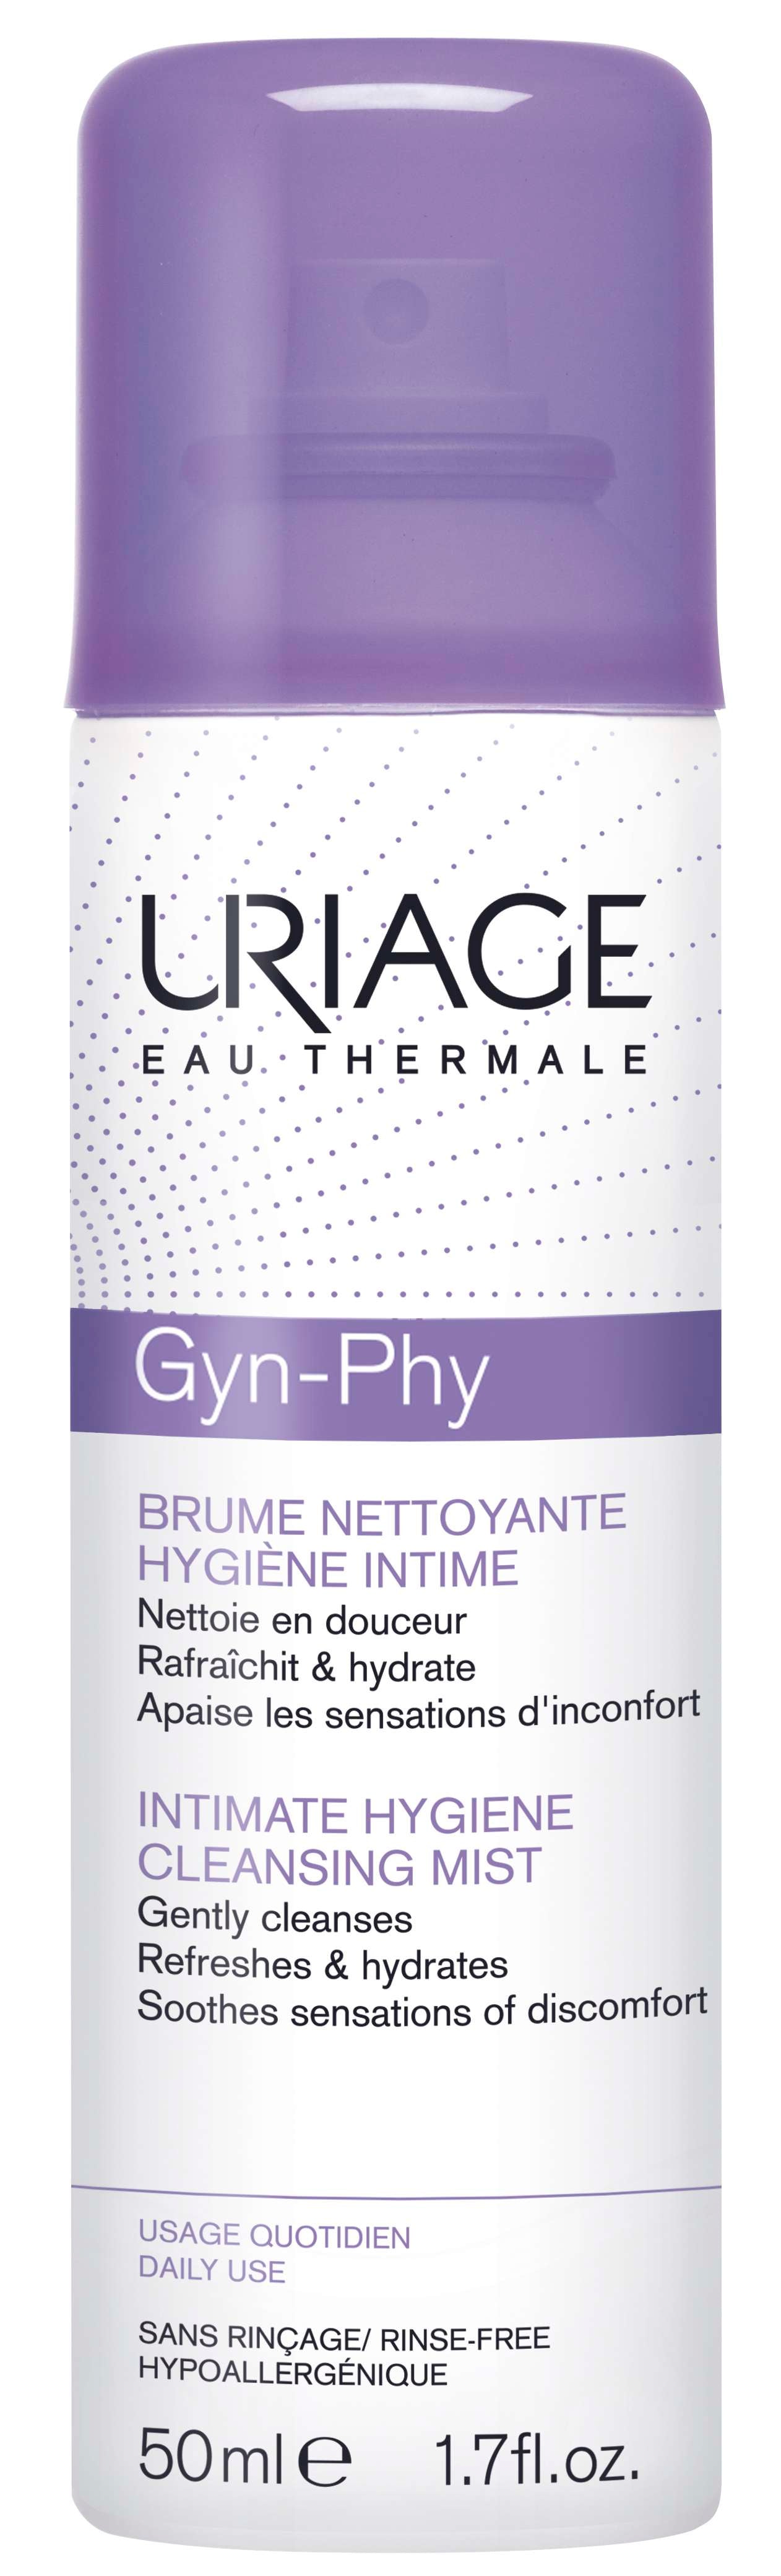 Uriage Gyn-Phy Spray de Limpeza Íntima 50ml